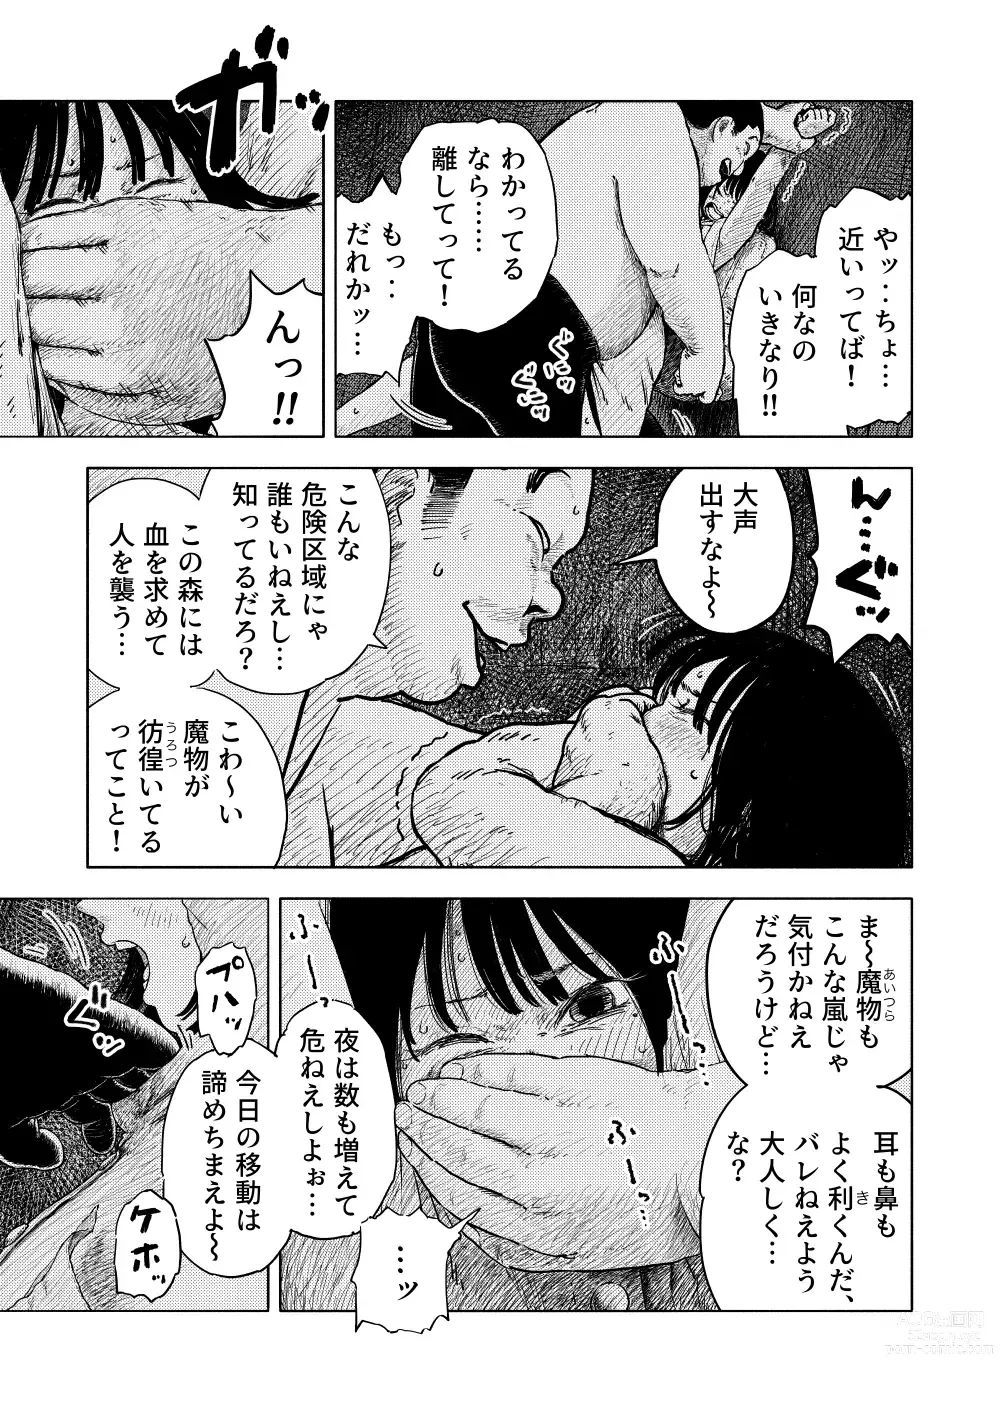 Page 4 of doujinshi Fukaku